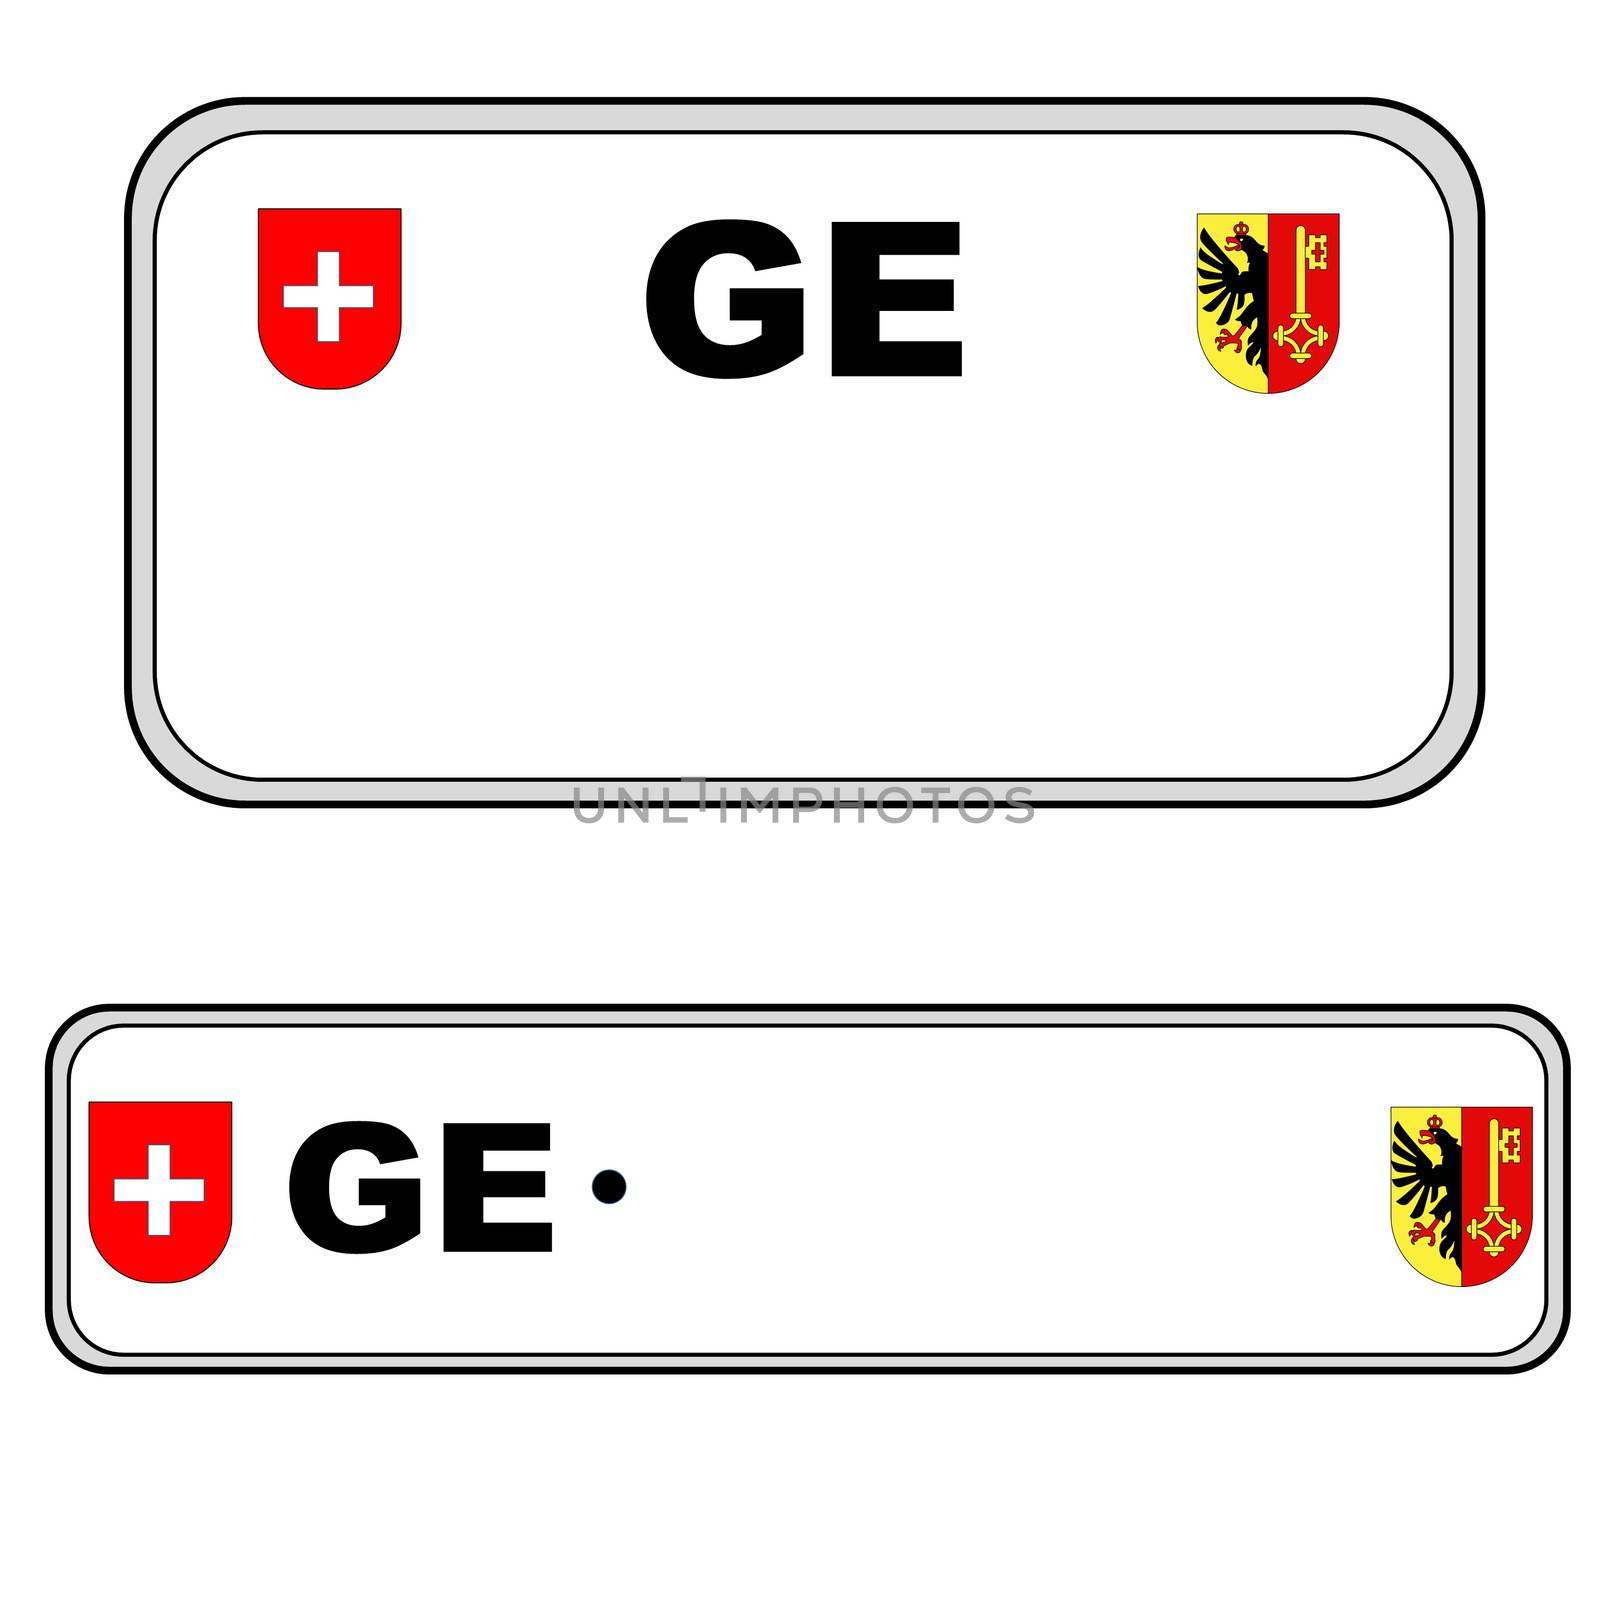 Geneva plate number, Switzerland by Elenaphotos21